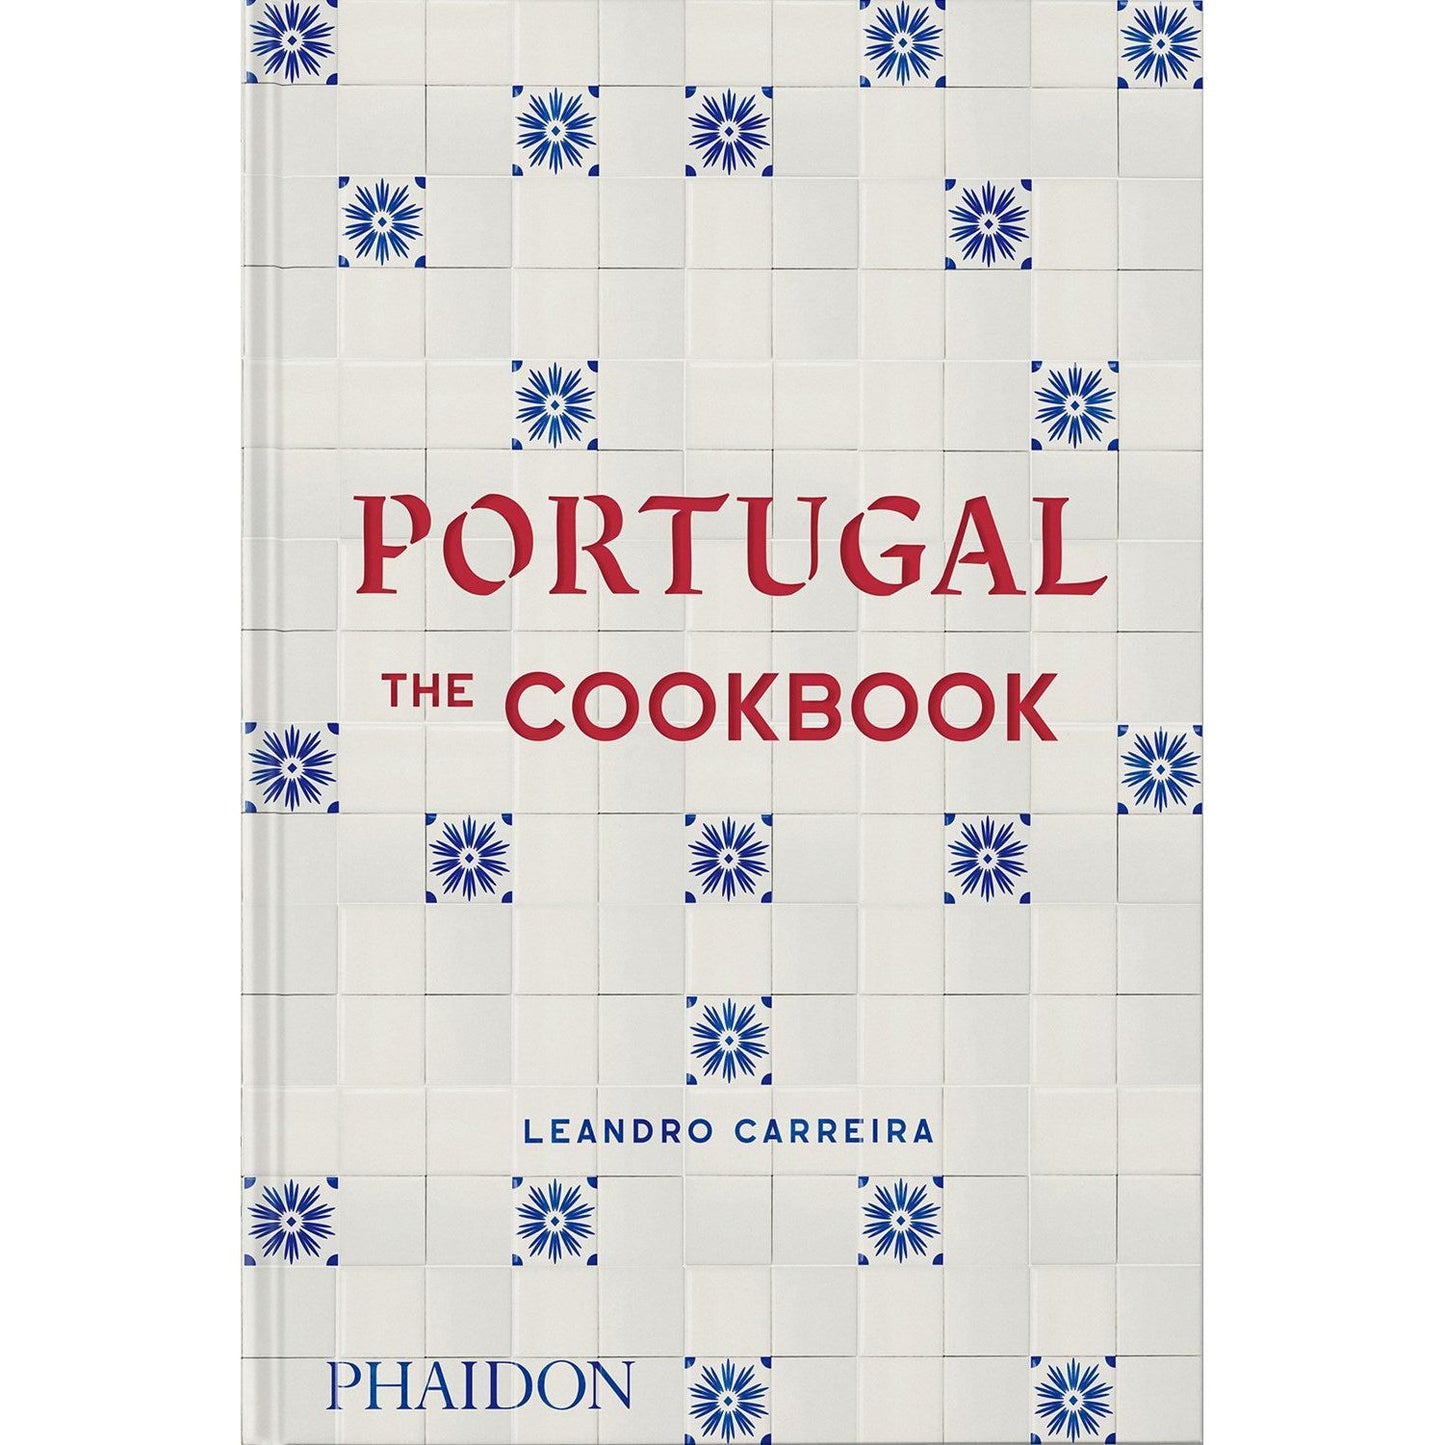 Portugal: The Cookbook (Leandro Carreira)